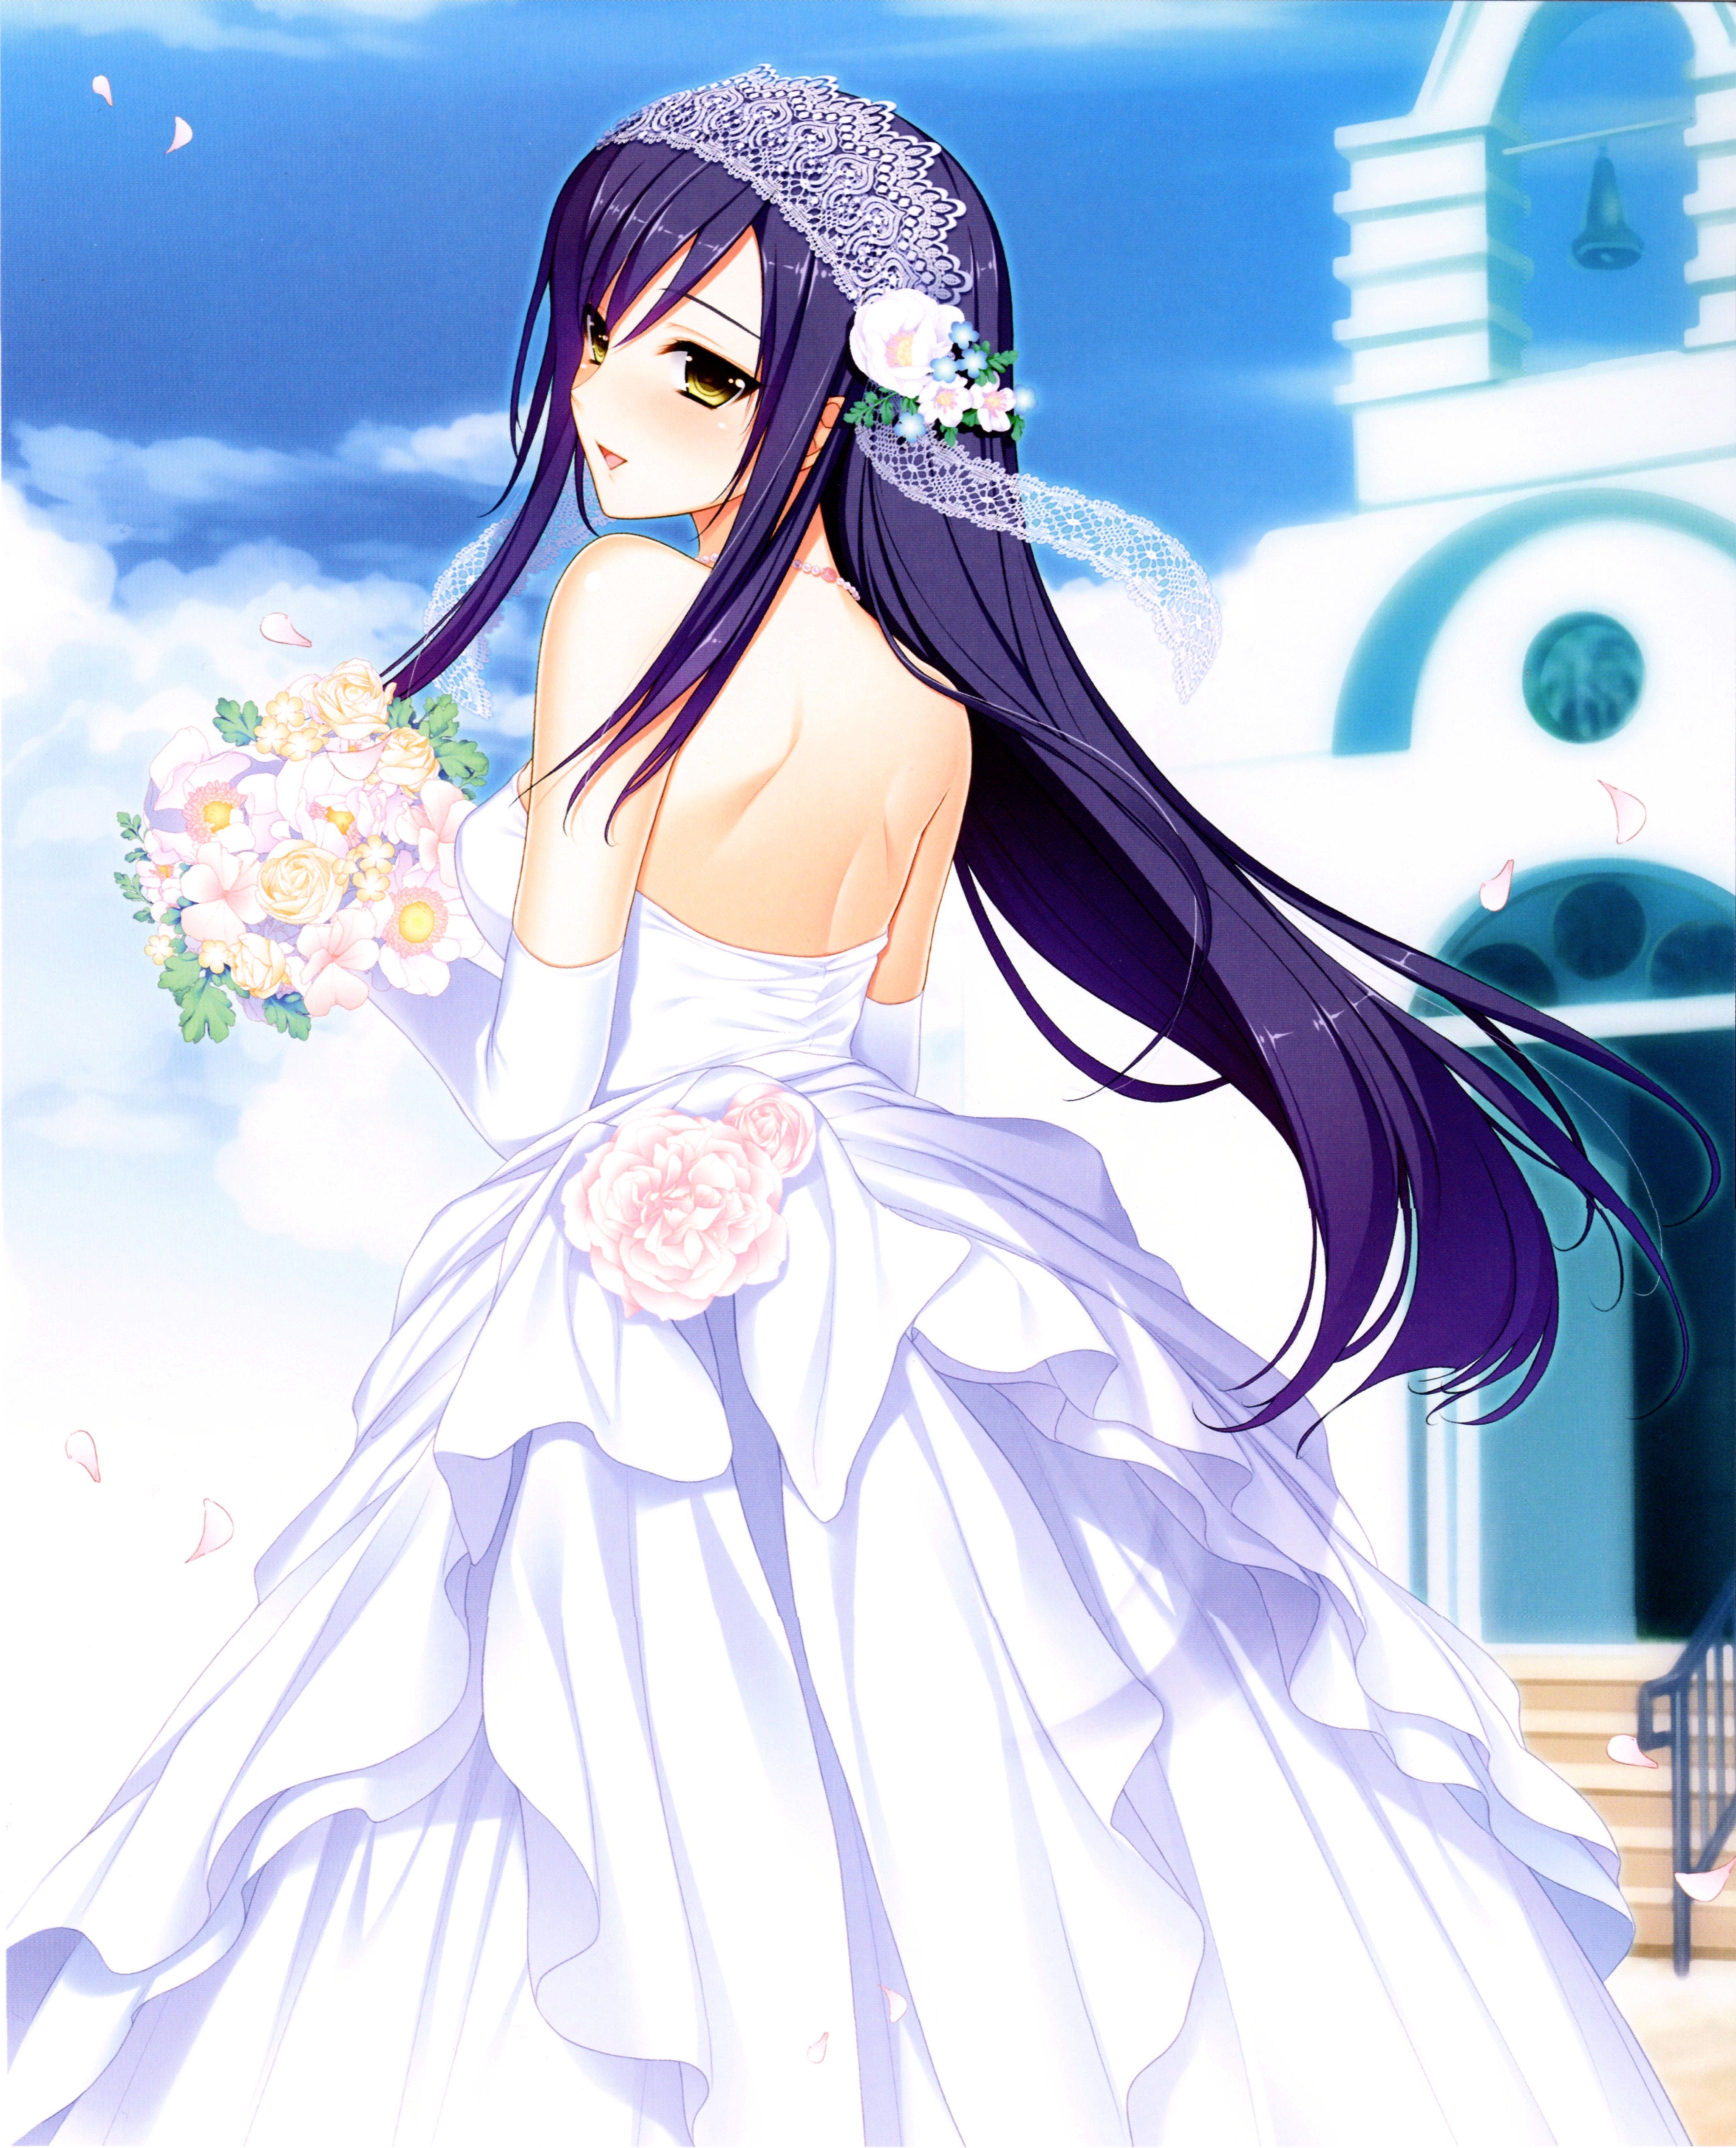 White Long Hair Anime Girl With Blue Dress HD Anime Girl Wallpapers  HD  Wallpapers  ID 98363